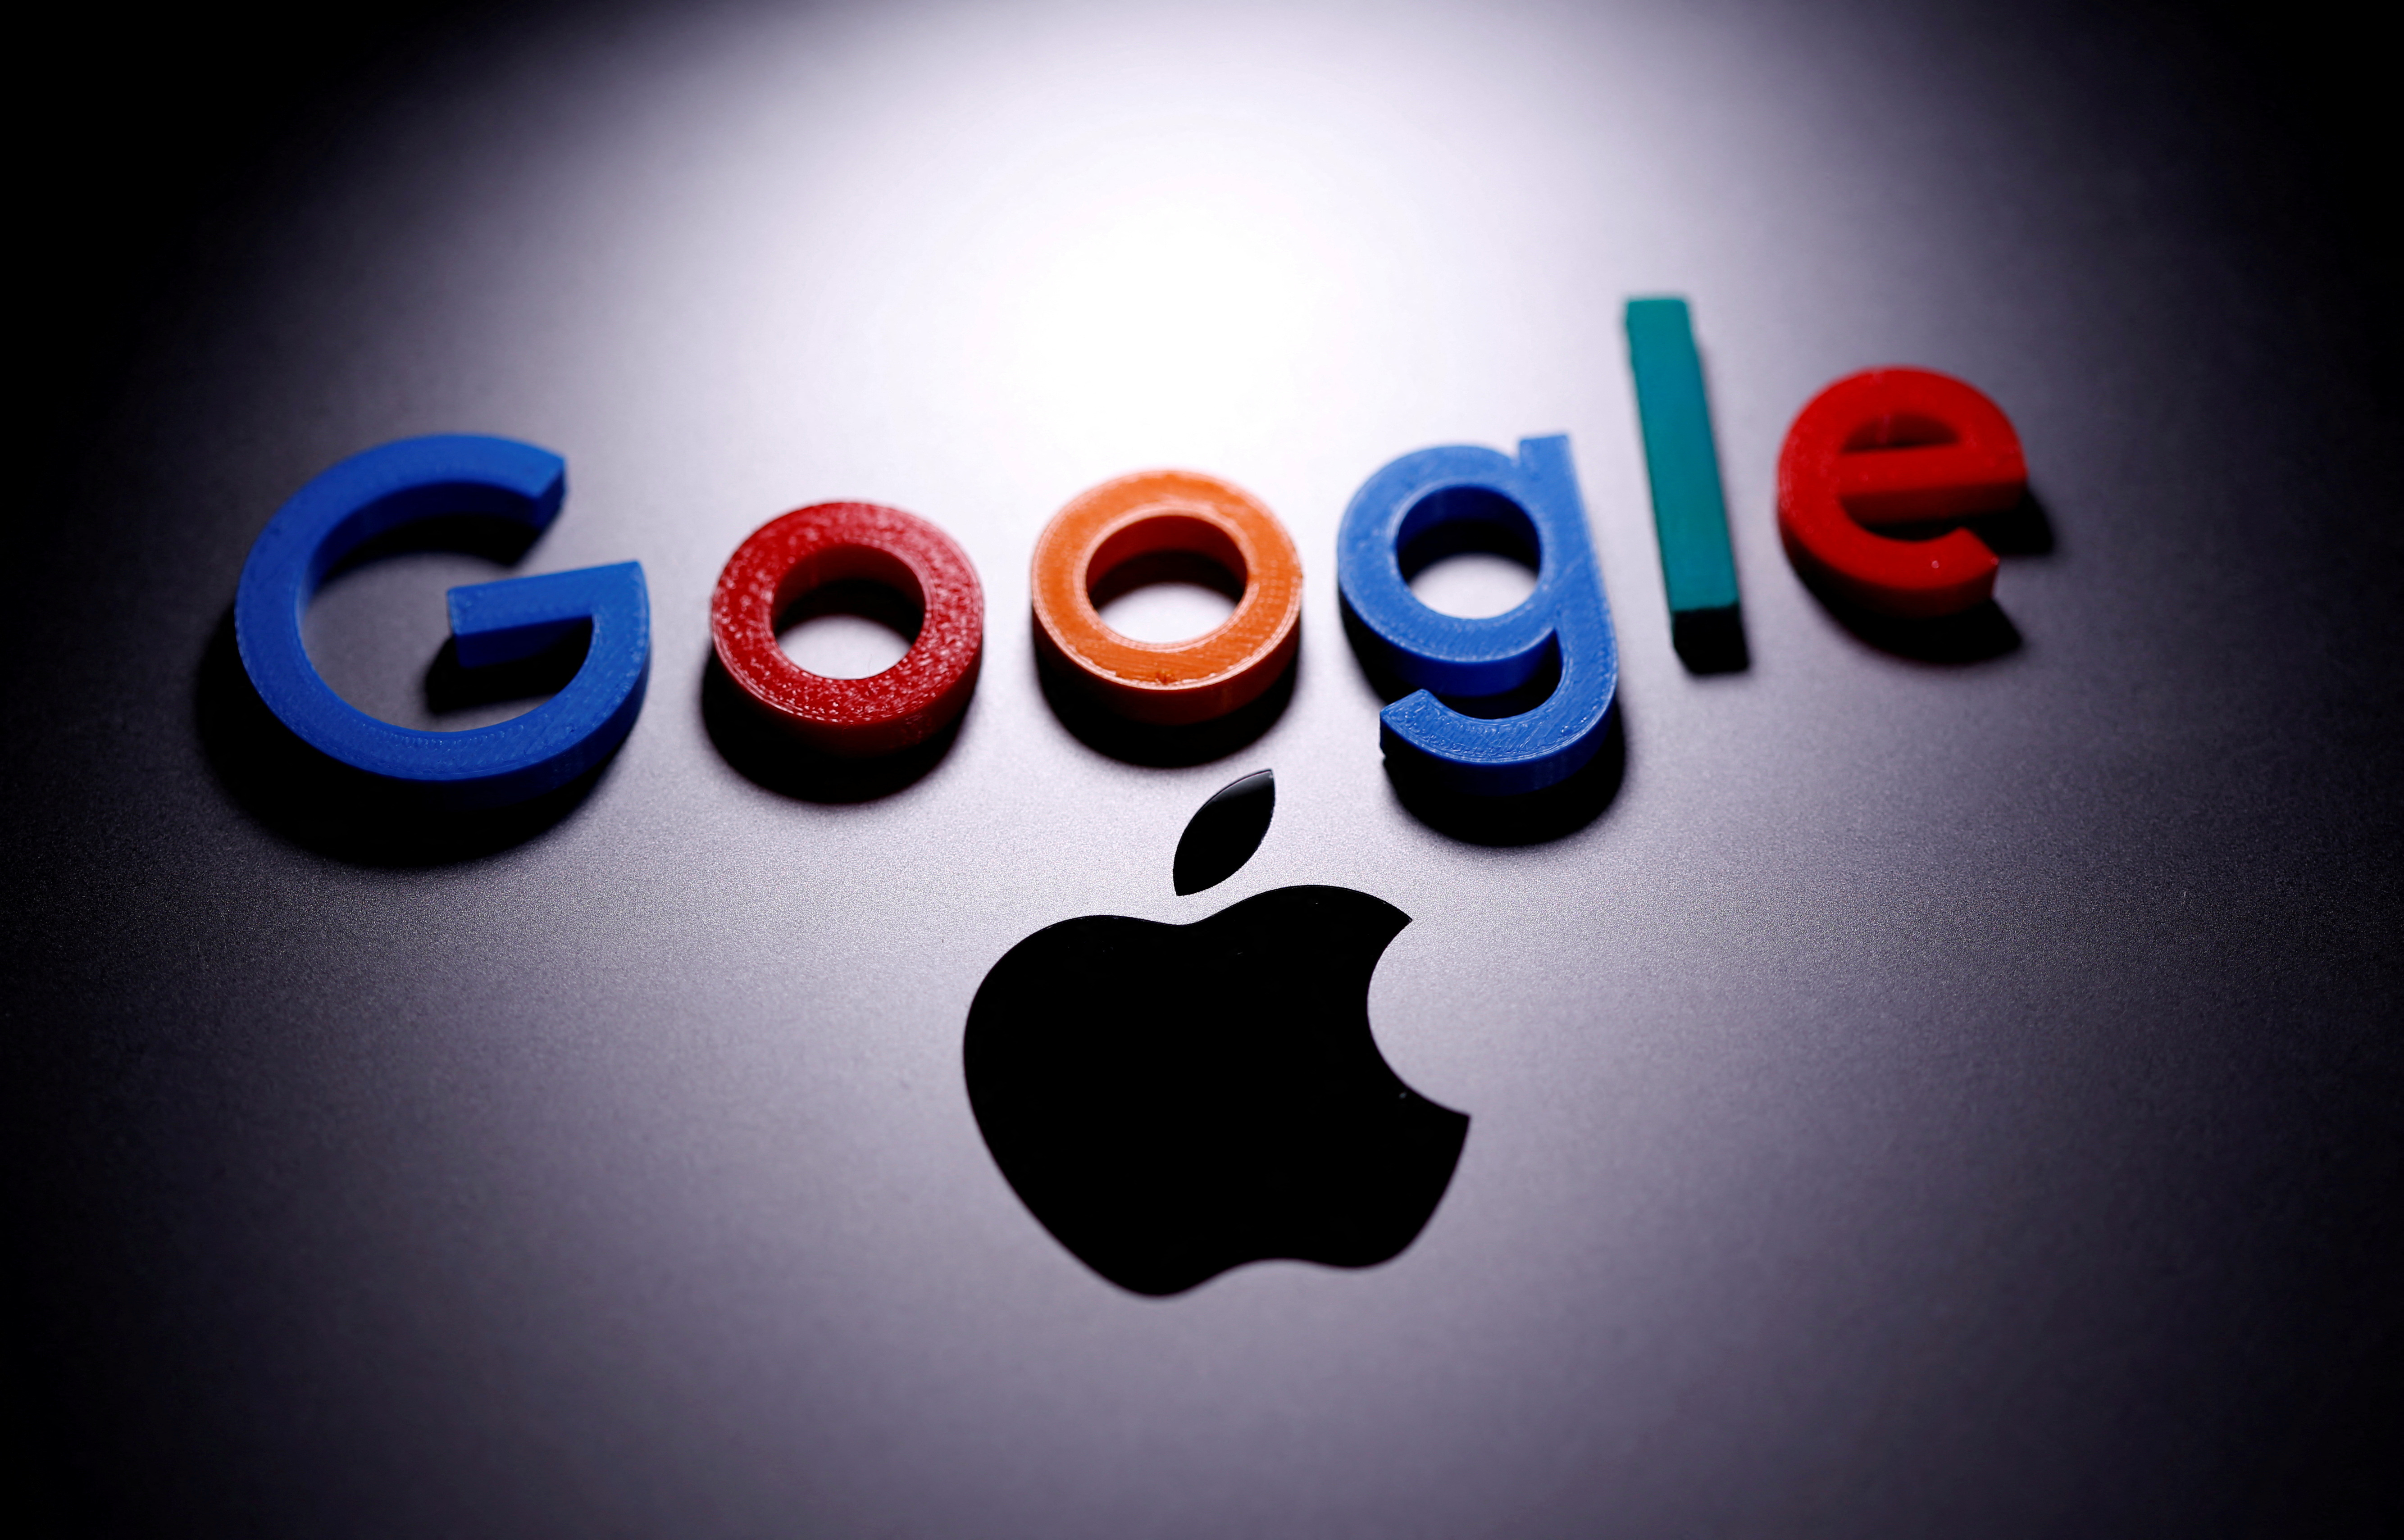 Governments spying on Apple, Google users through push notifications – US senator